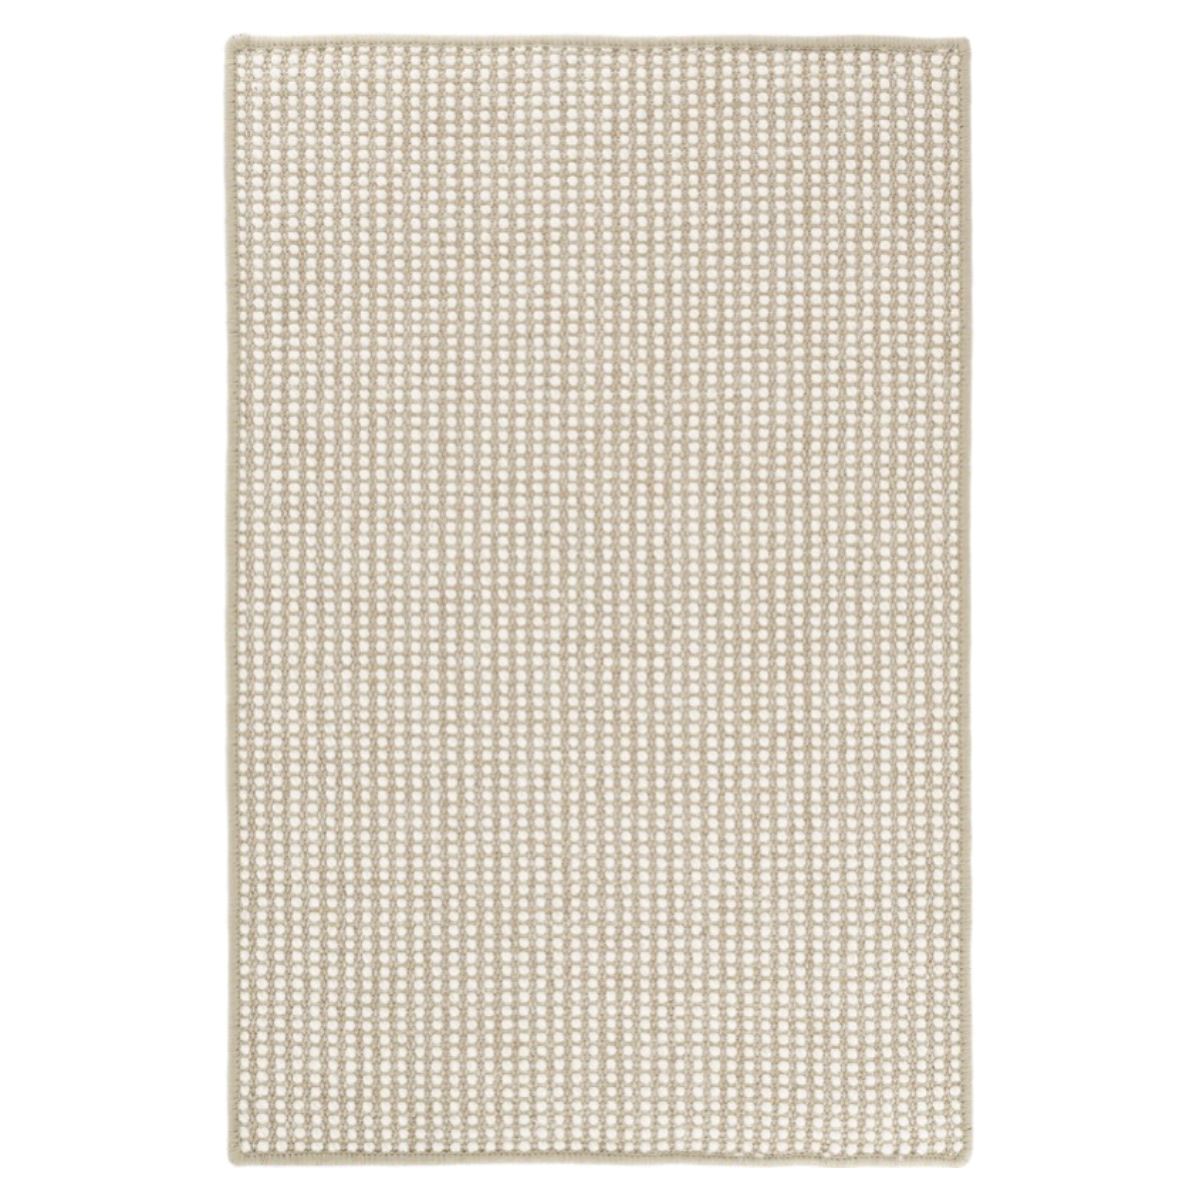 Pixel Wheat Woven Sisal/Wool Rug. Top view. 